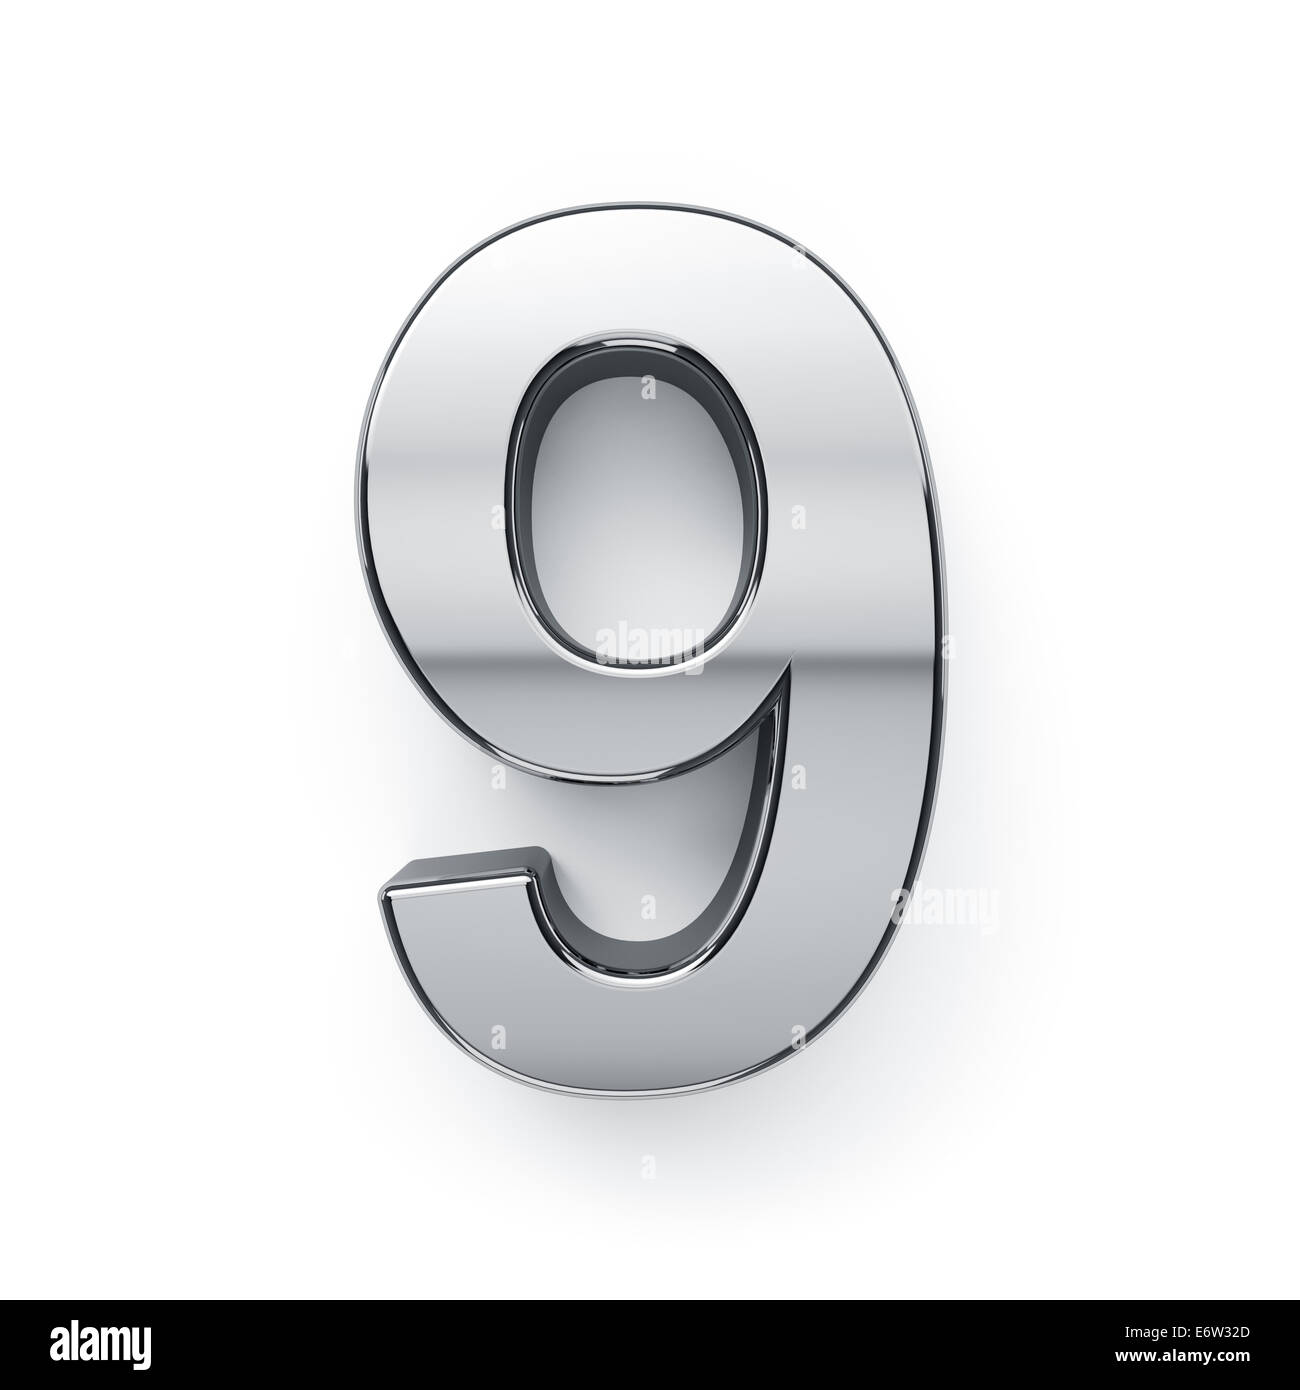 3d render of metallic digit nine symbol - 9. Isolated on white background Stock Photo